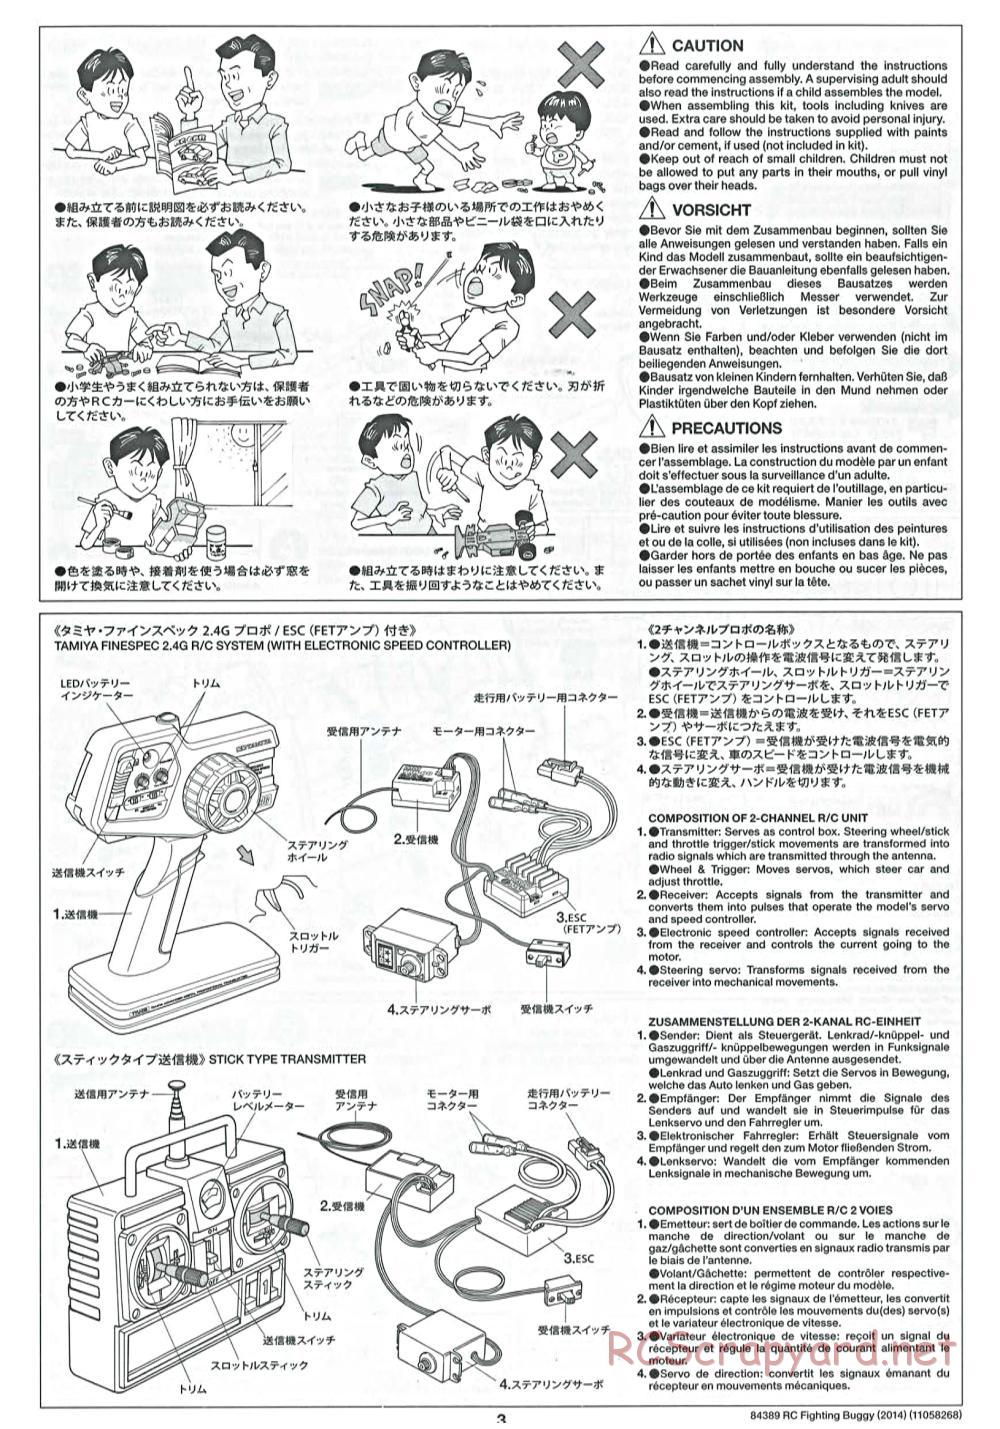 Tamiya - Fighting Buggy (2014) Chassis - Manual - Page 3